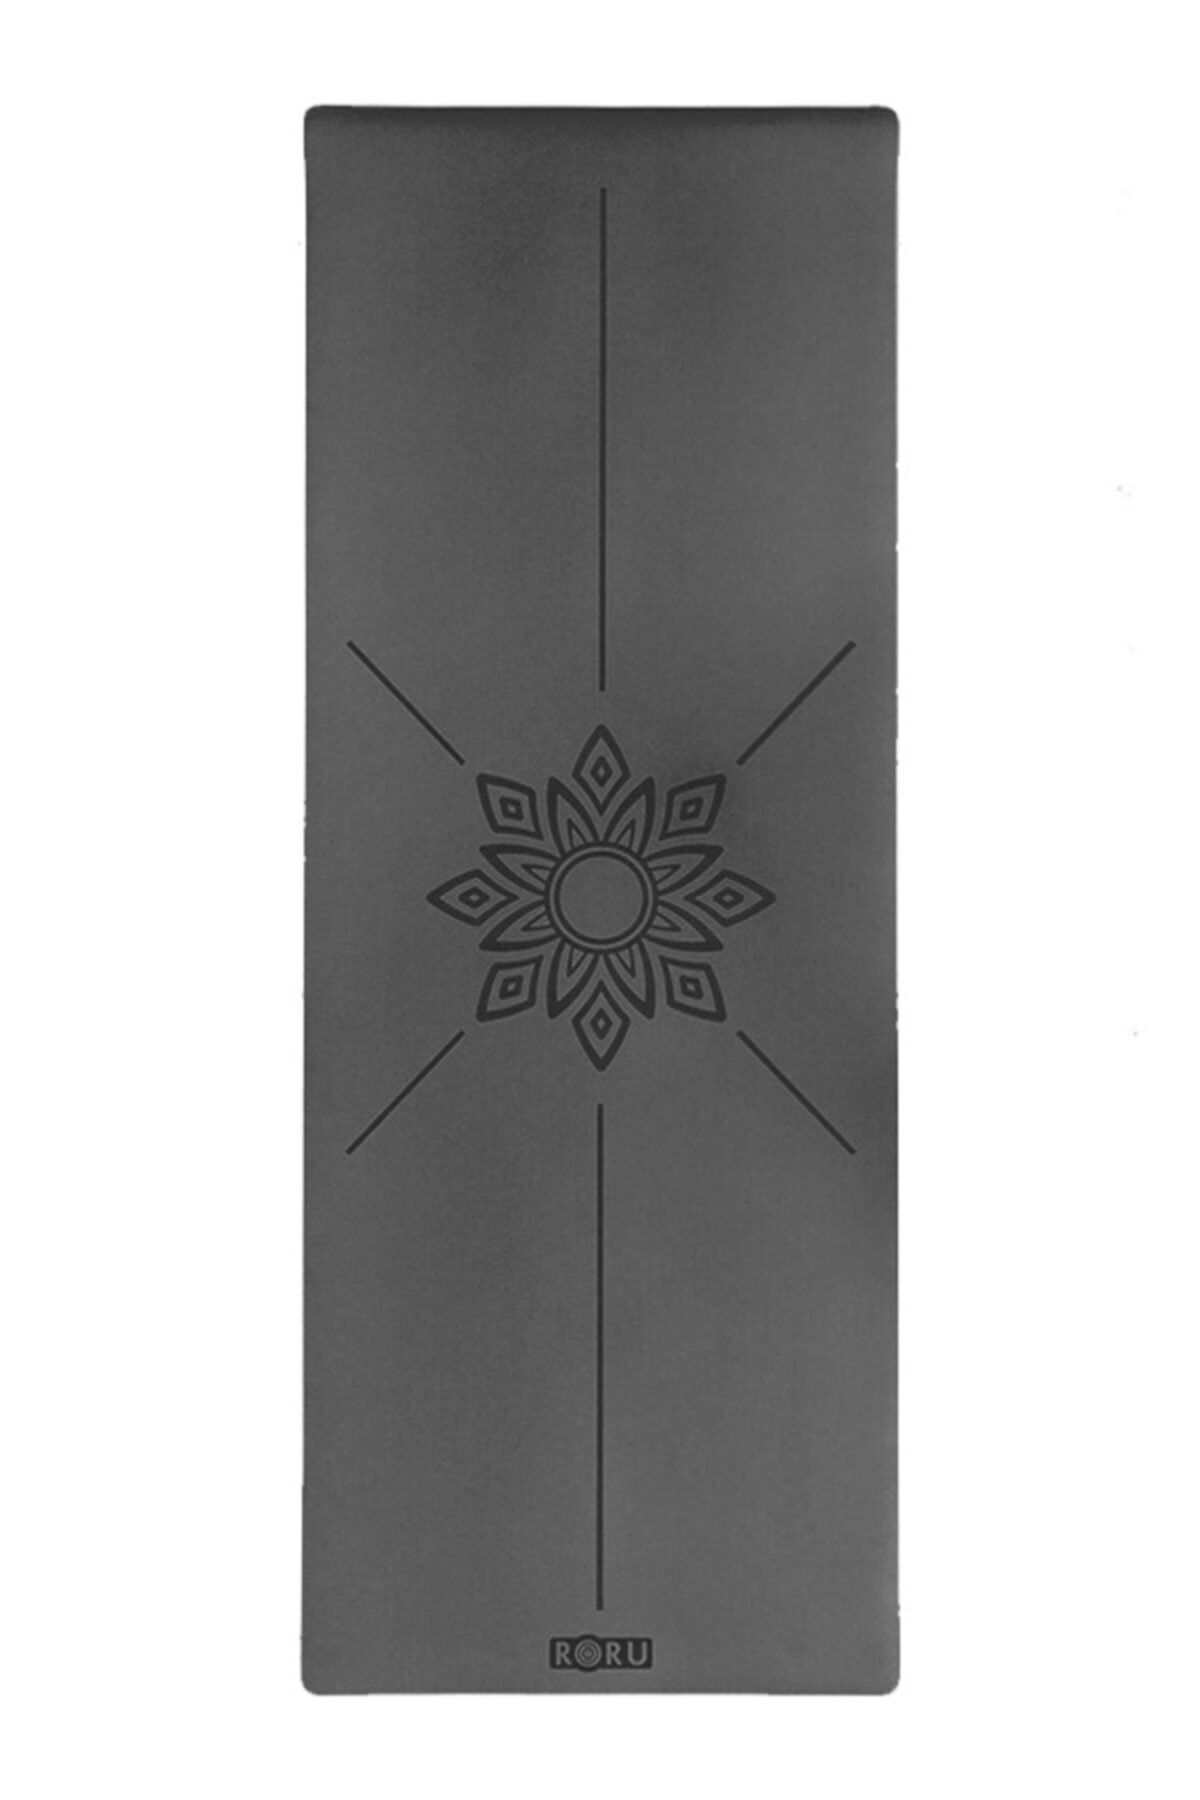 Roru Concept Sun Series Kaydırmaz Yüzeyli Yoga Matı - Açık Siyah 5mm